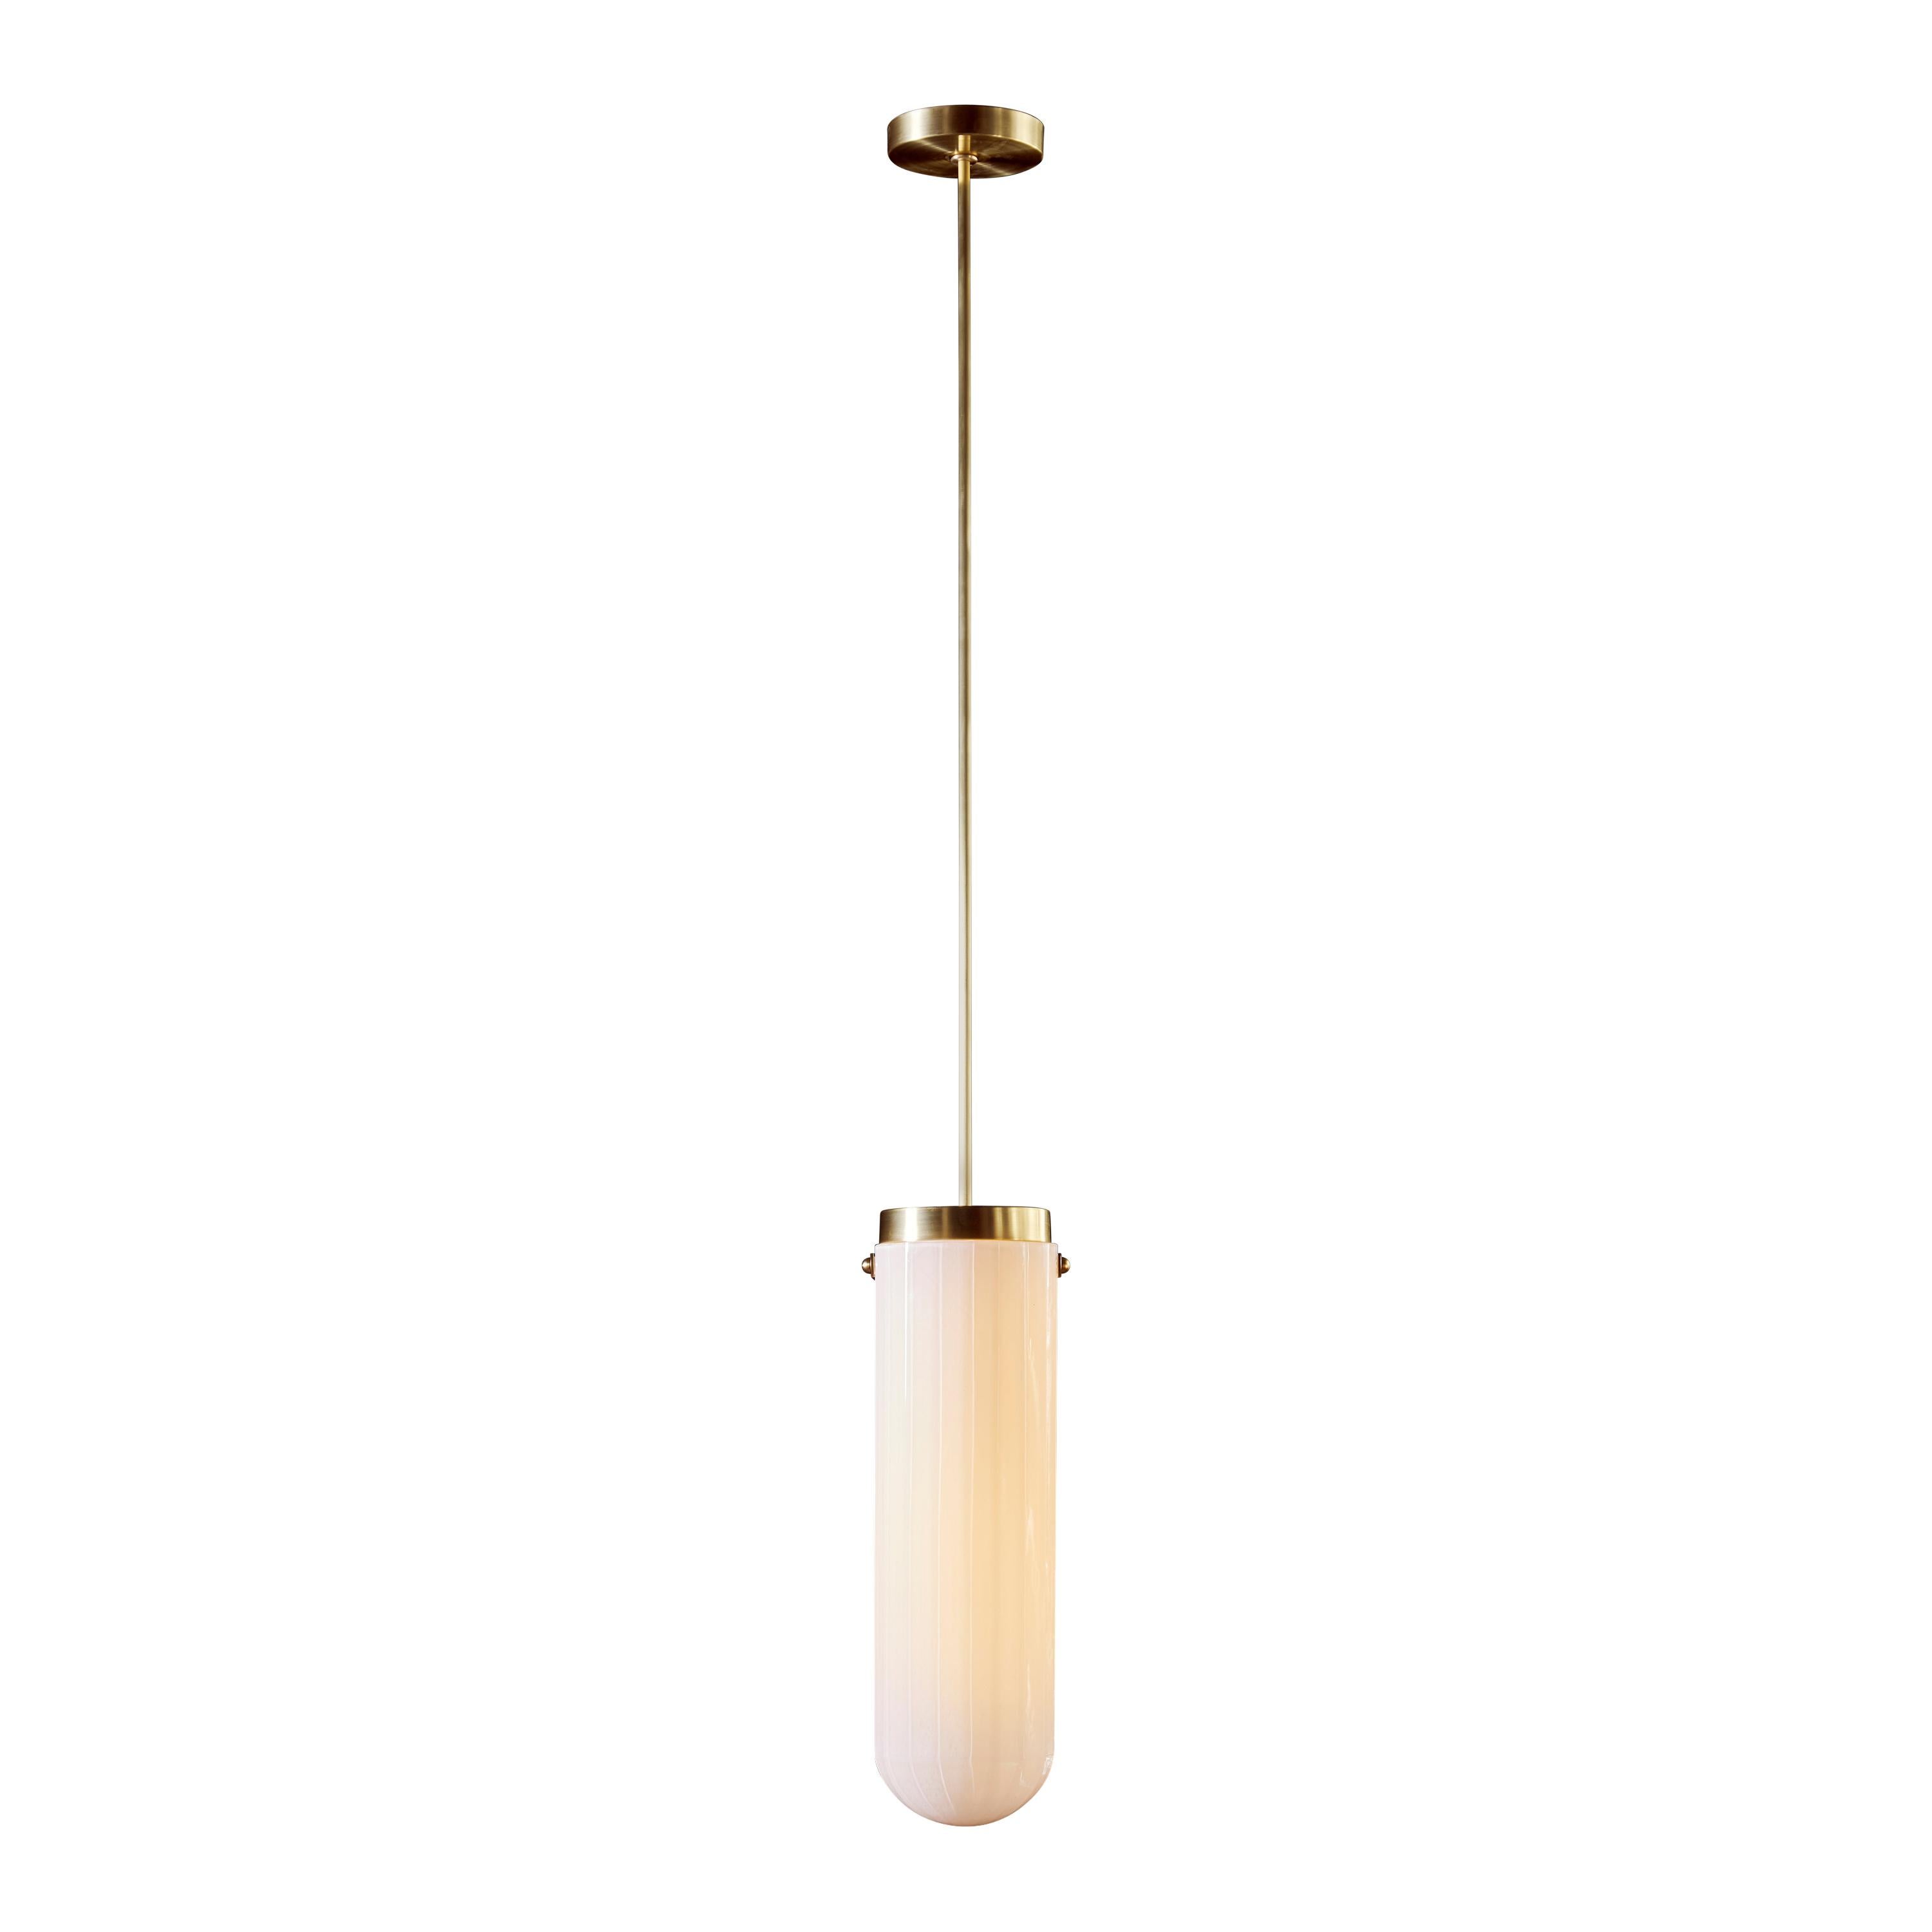 Helios Streamline Moderne Inspired Blown Glass and Brass Pendant Lamp